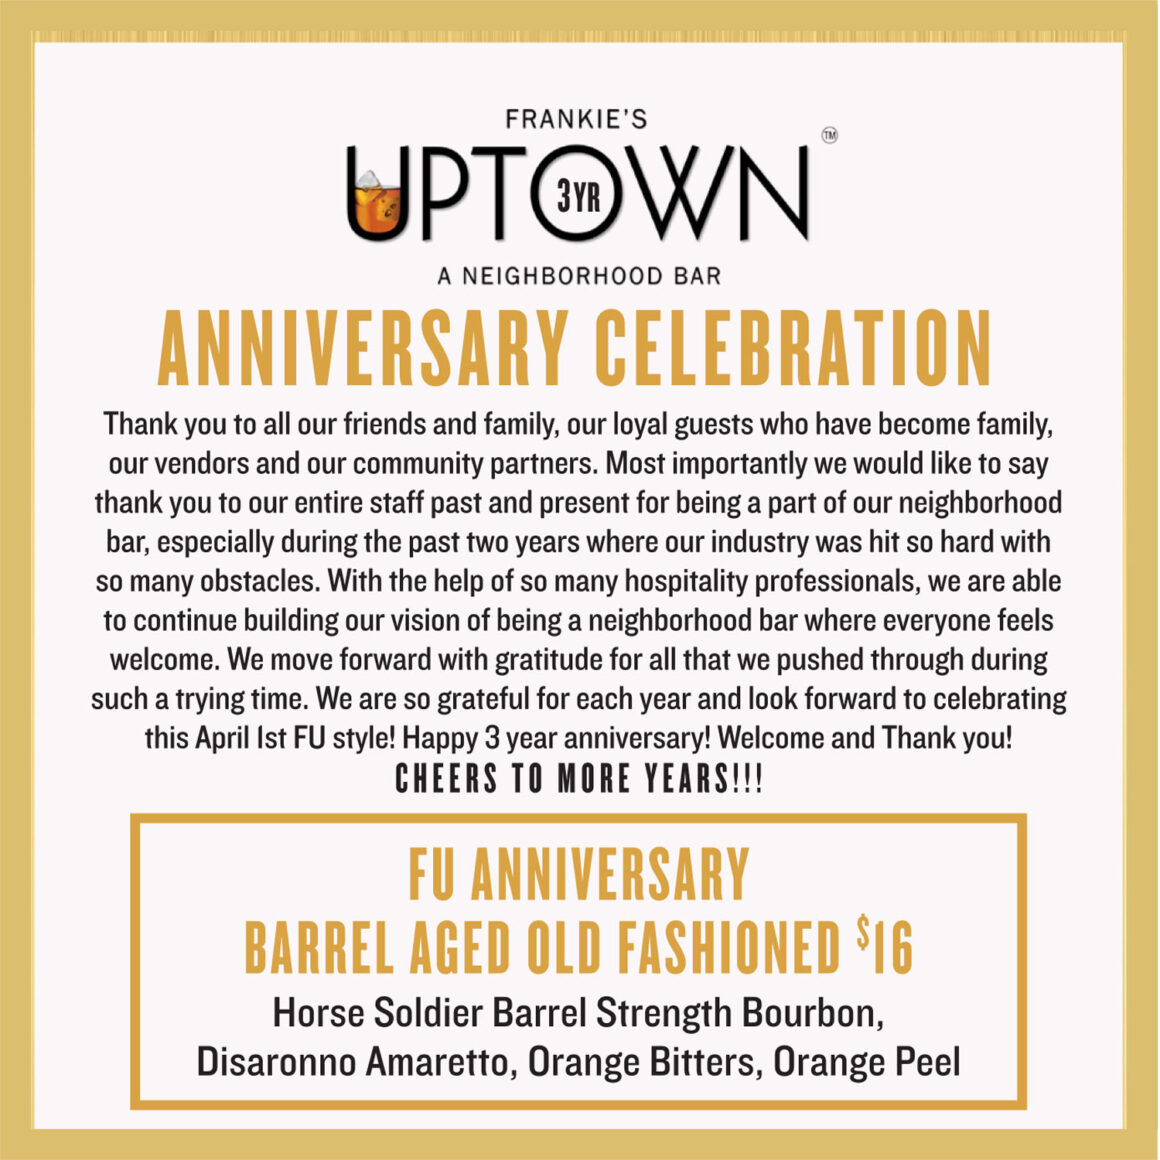 Frankie’s Uptown 3rd Anniversary